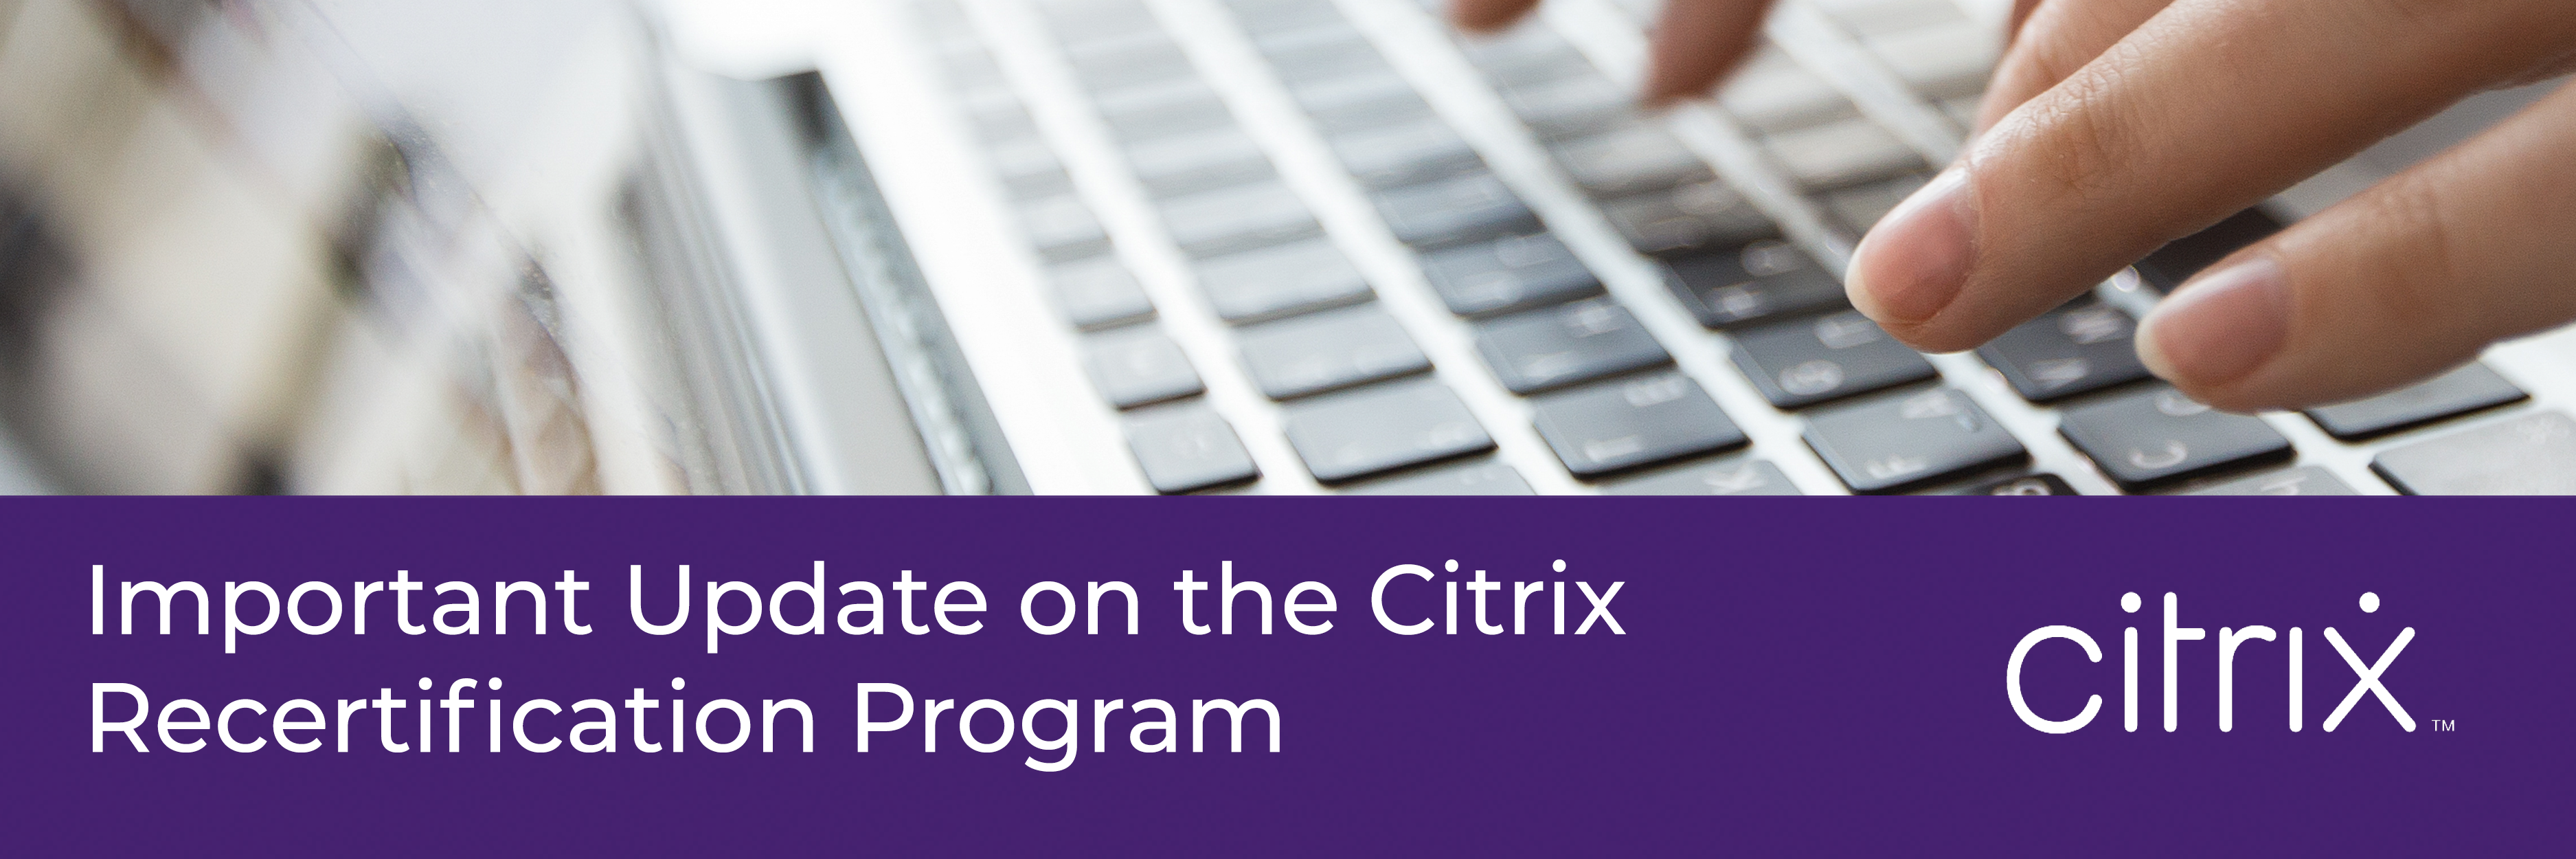 Important update on the Citrix Recertification Program_blog